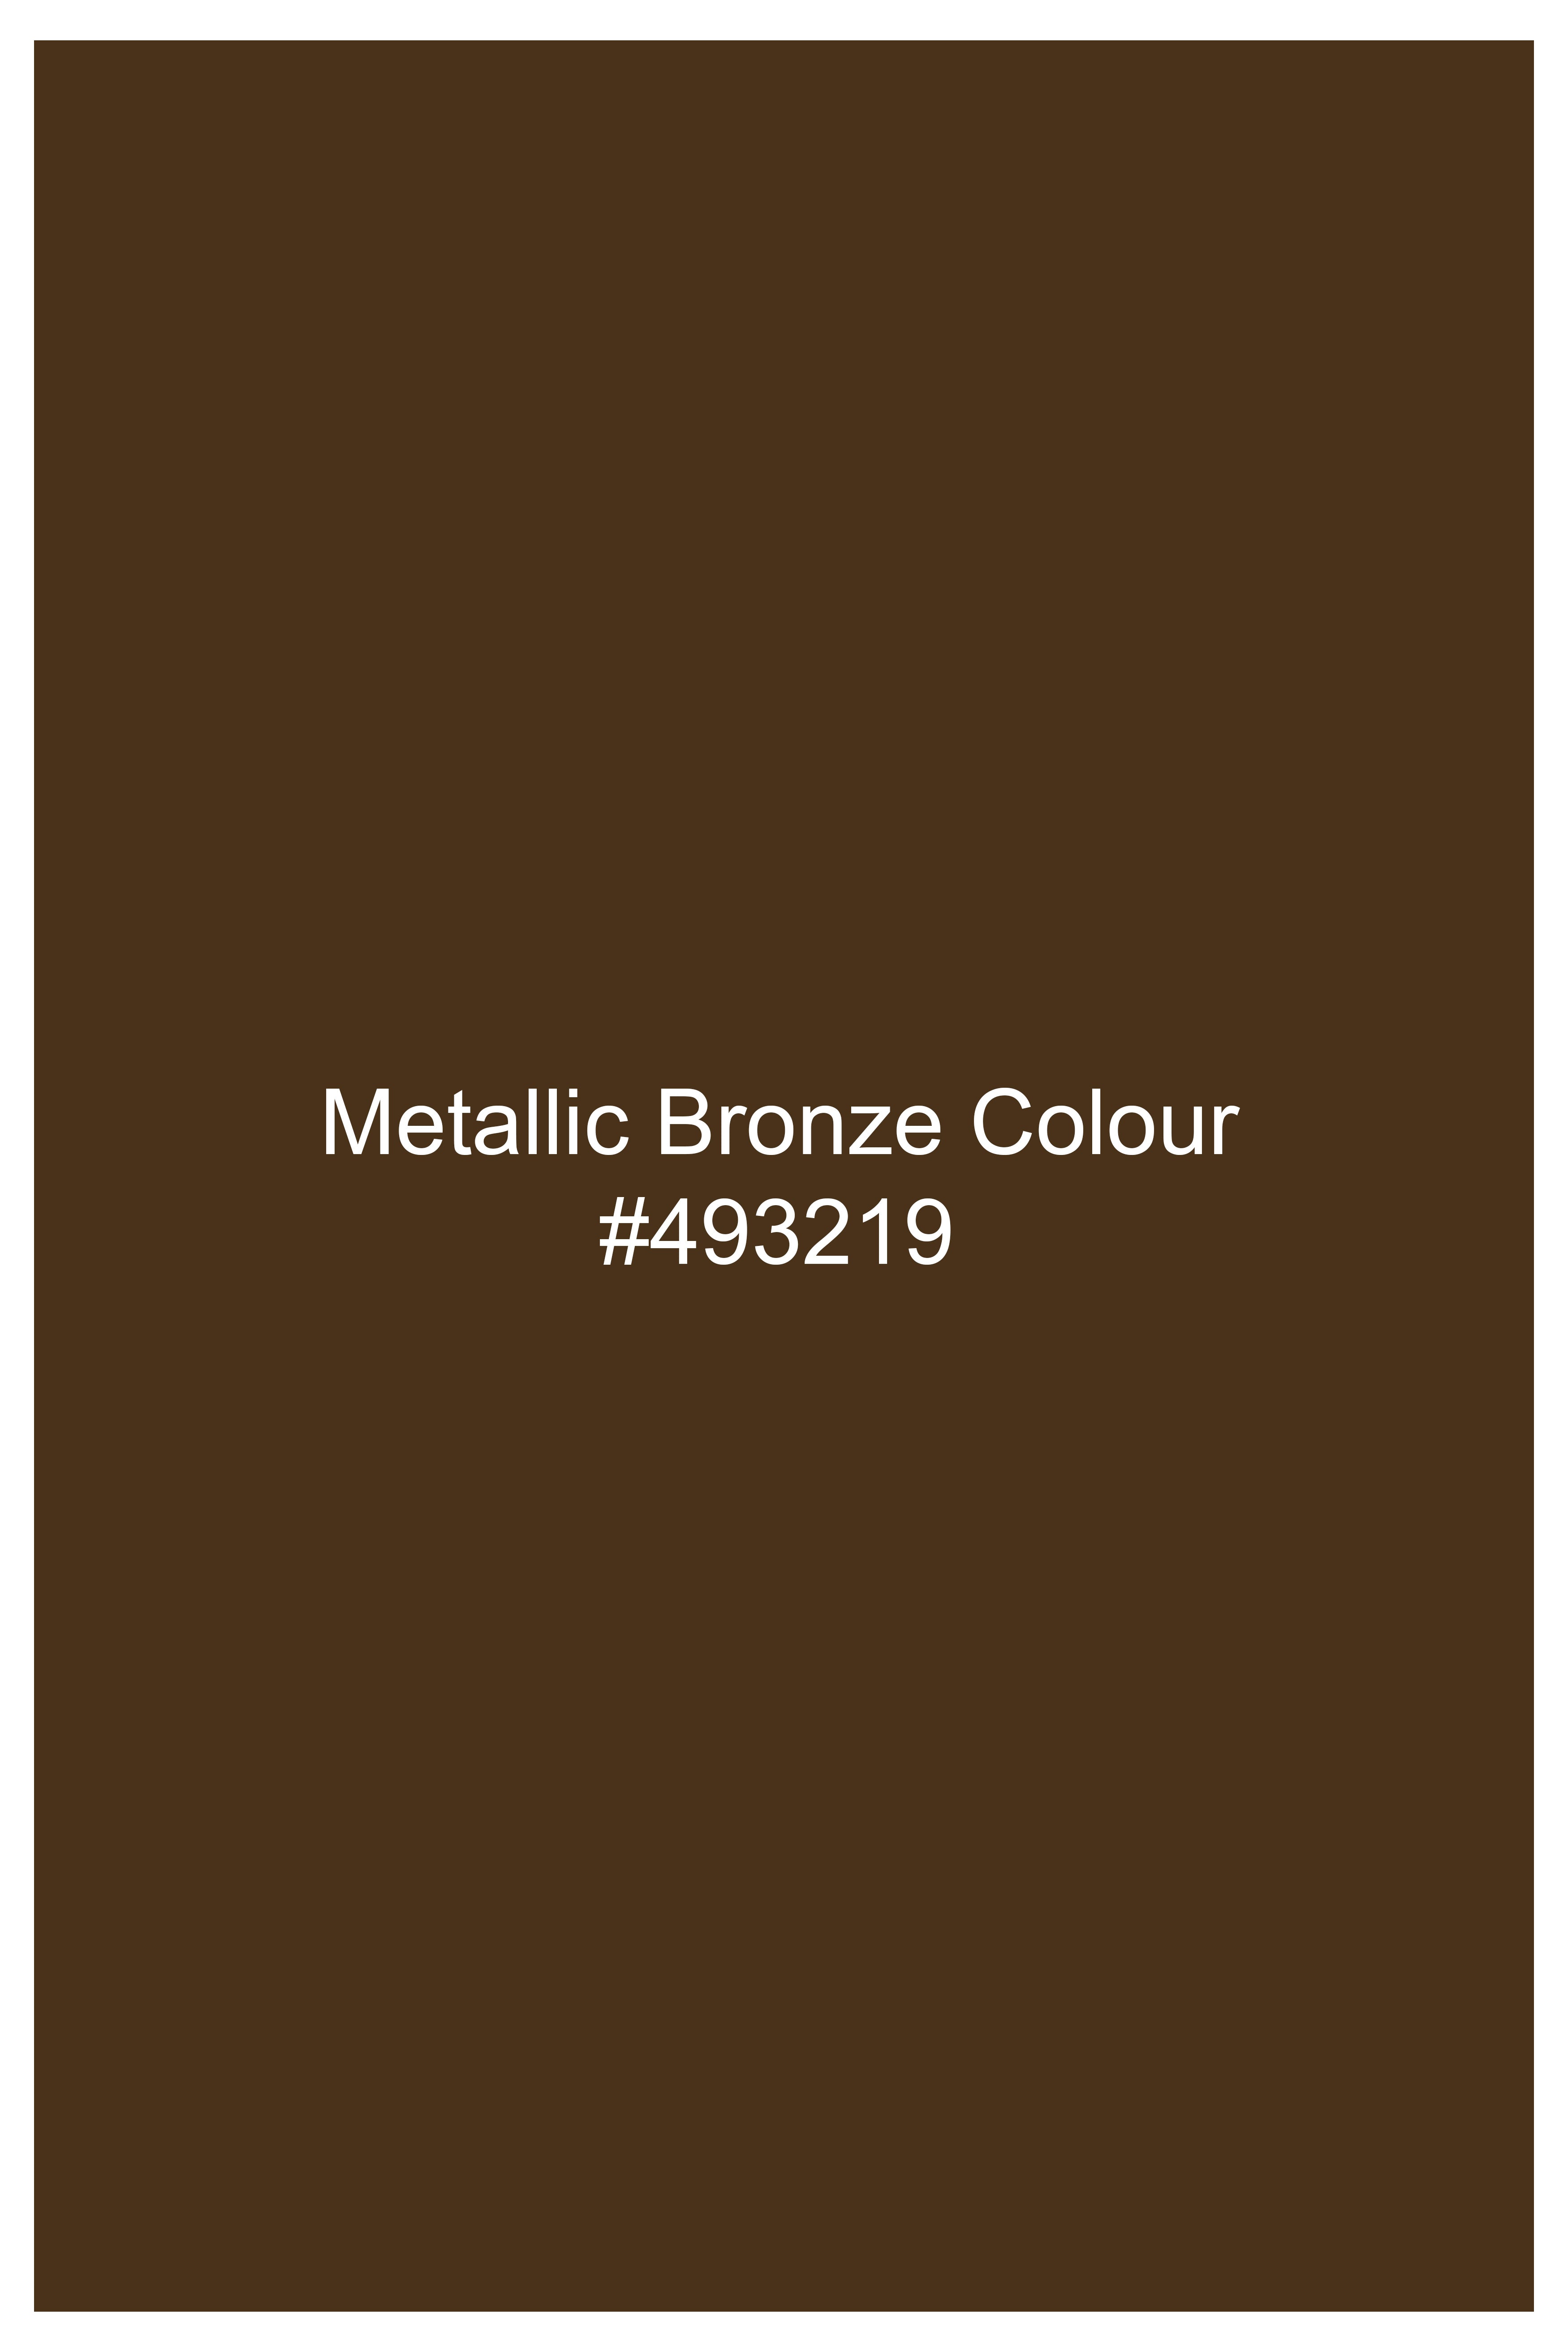 Metallic Bronze Brown Premium Cotton Stretchable Traveler Suit ST2779-SB-36,ST2779-SB-38,ST2779-SB-40,ST2779-SB-42,ST2779-SB-44,ST2779-SB-46,ST2779-SB-48,ST2779-SB-50,ST2779-SB-52,ST2779-SB-54,ST2779-SB-56,ST2779-SB-58,ST2779-SB-60